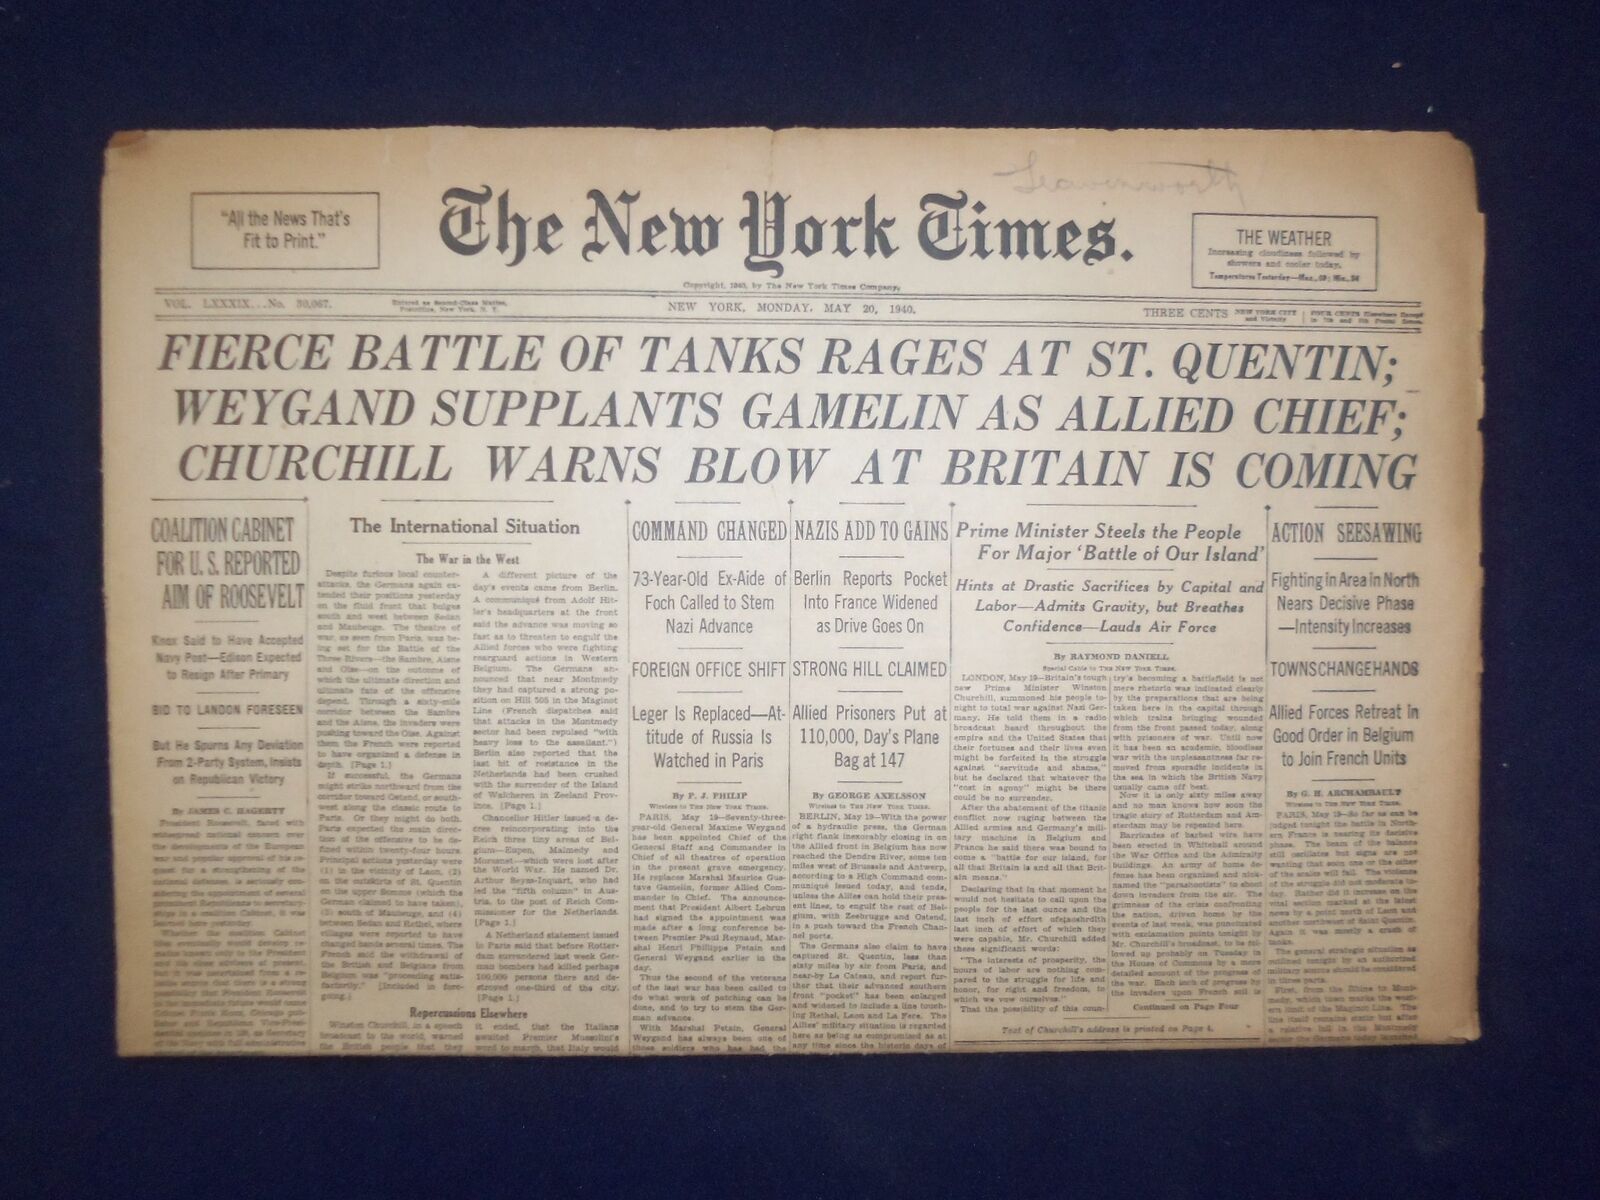 1940 MAY 20 NEW YORK TIMES - CHURCHILL WARNS BLOW AT BRITAIN IS COMING - NP 6493